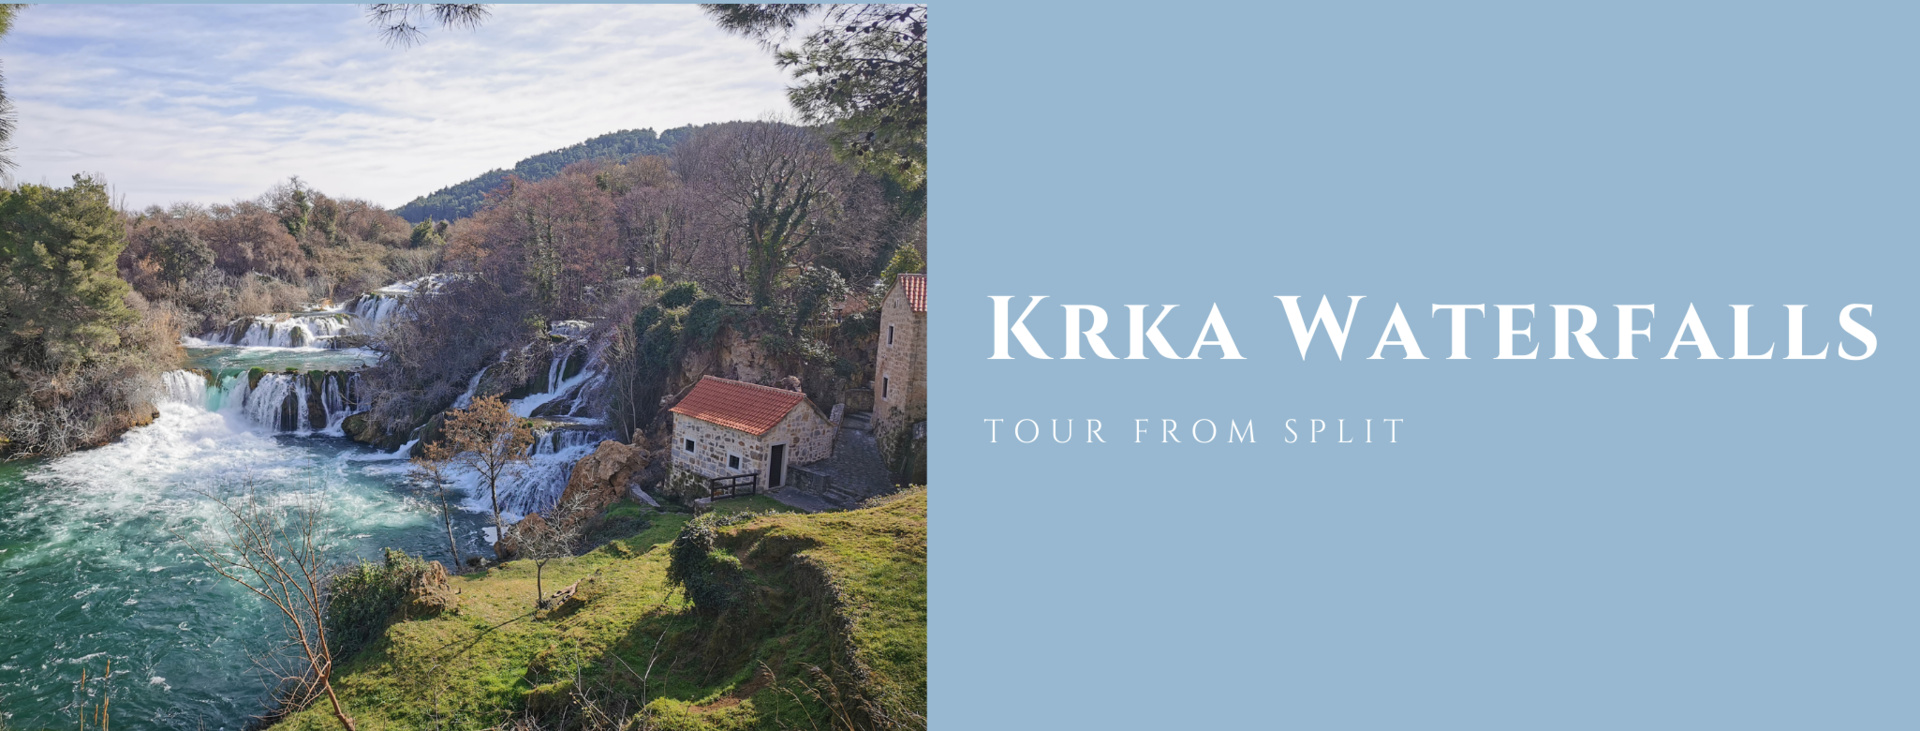 Krka Waterfalls main_copy